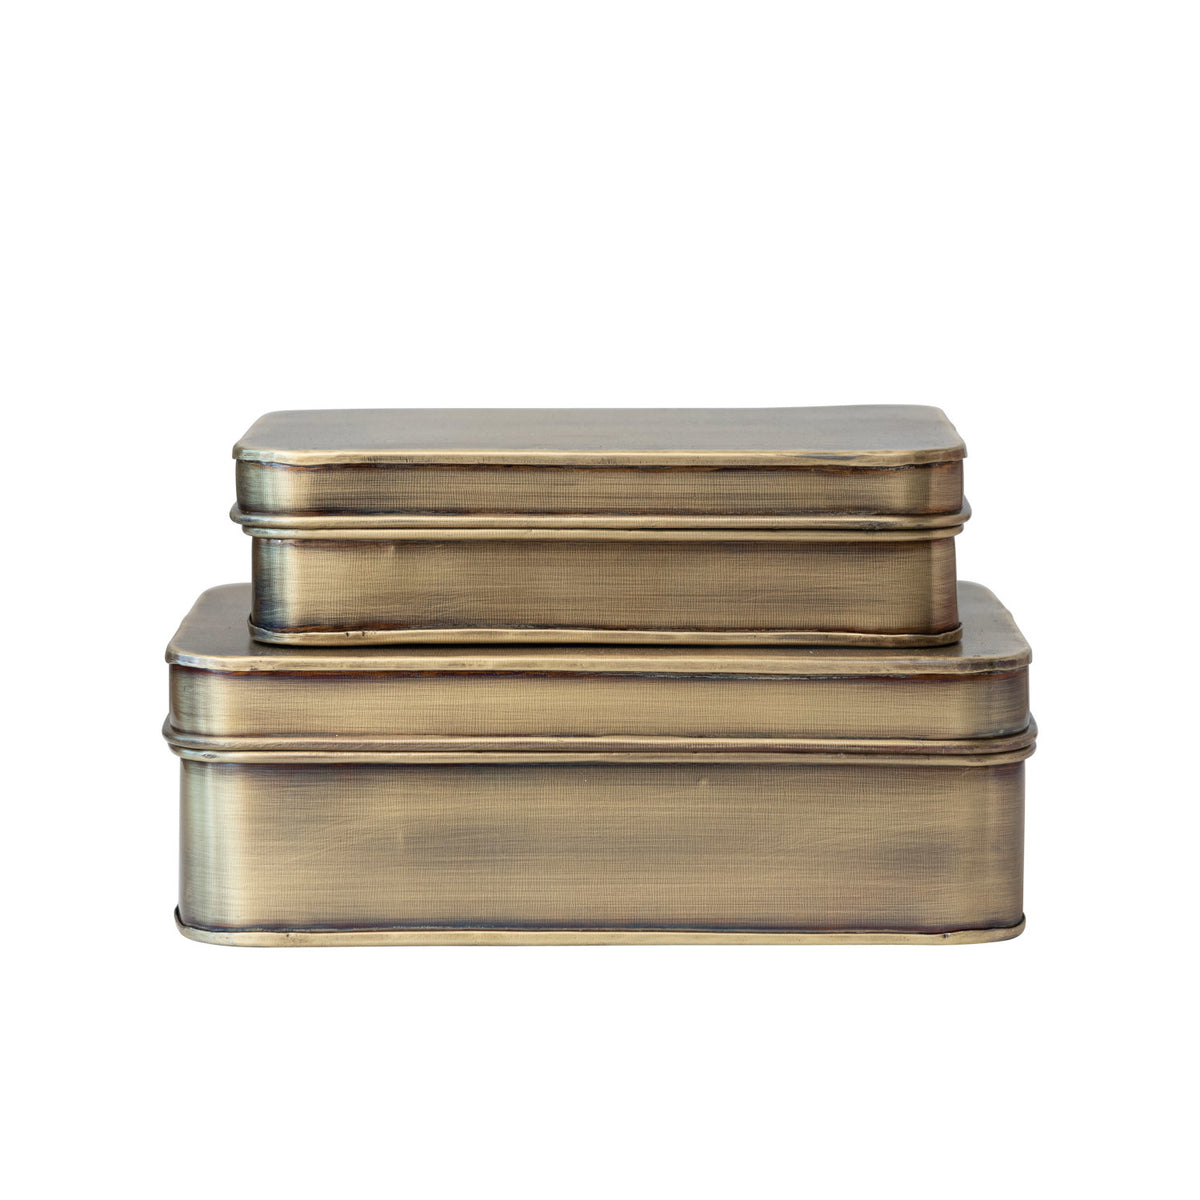 Small Metal Box, Antique Brass Finish